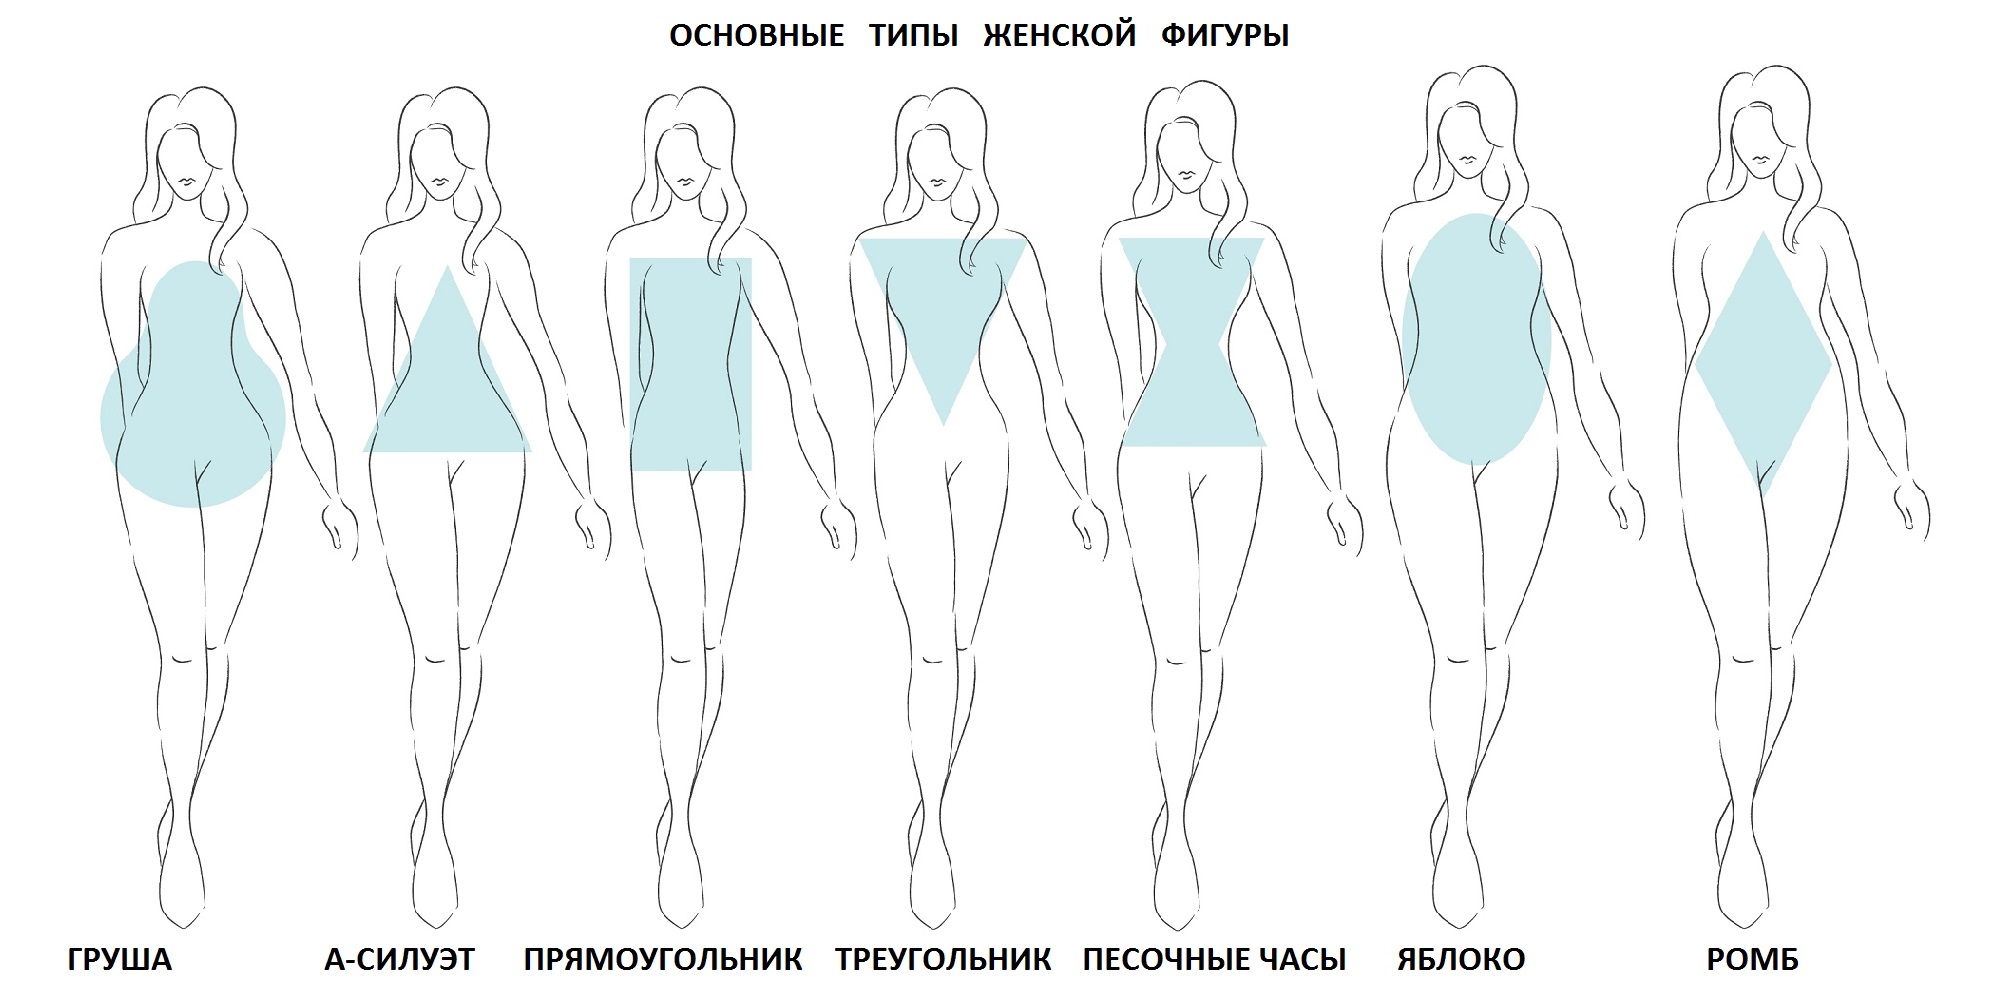 Типы форм. Типы телосложения женских фигур. Какие типы фигур бывают у женщин. Как определить Тип телосложения у женщин. Телосложение женщины рисунок типы.